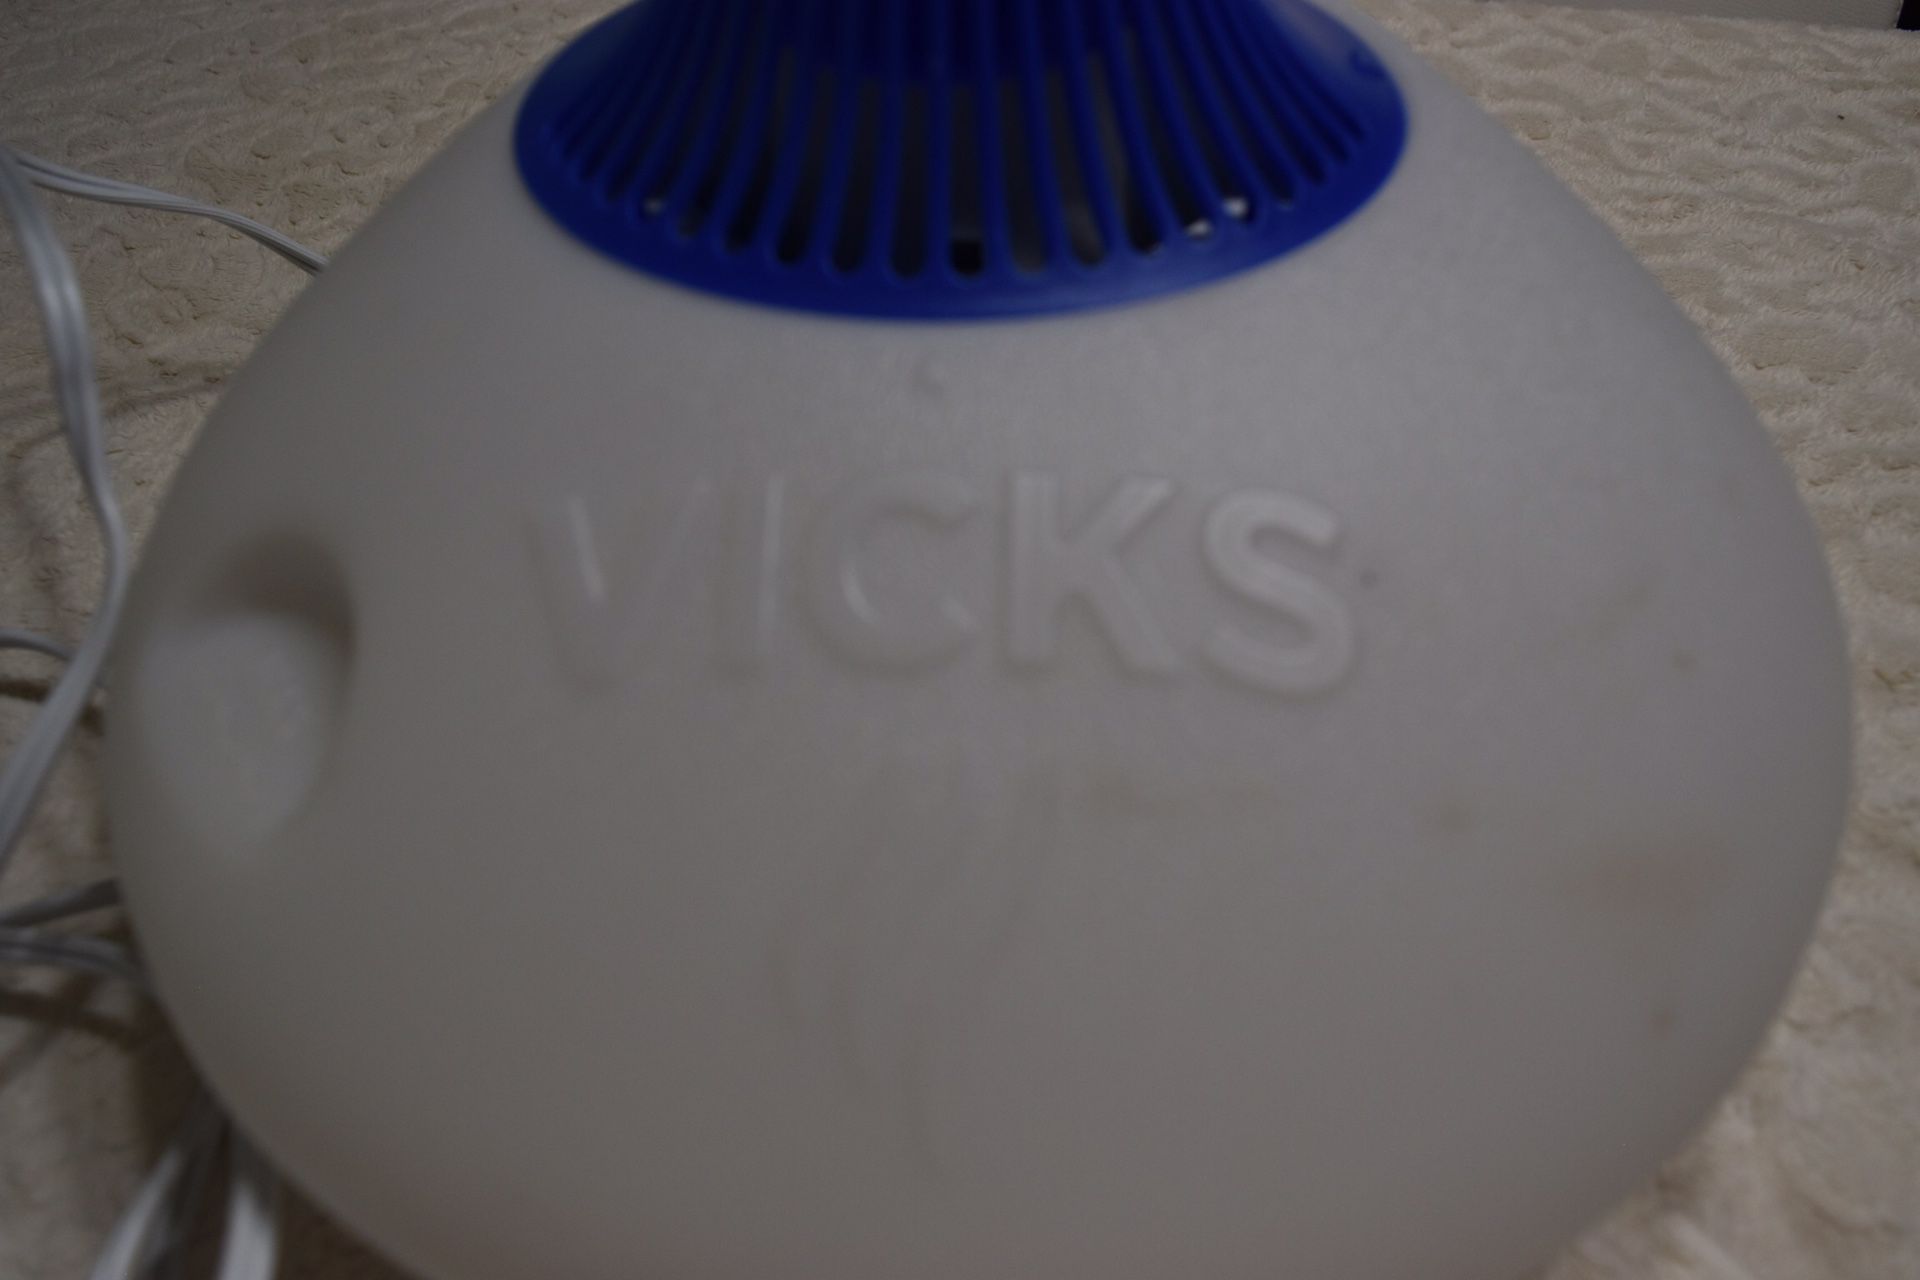 Vicks humidifier